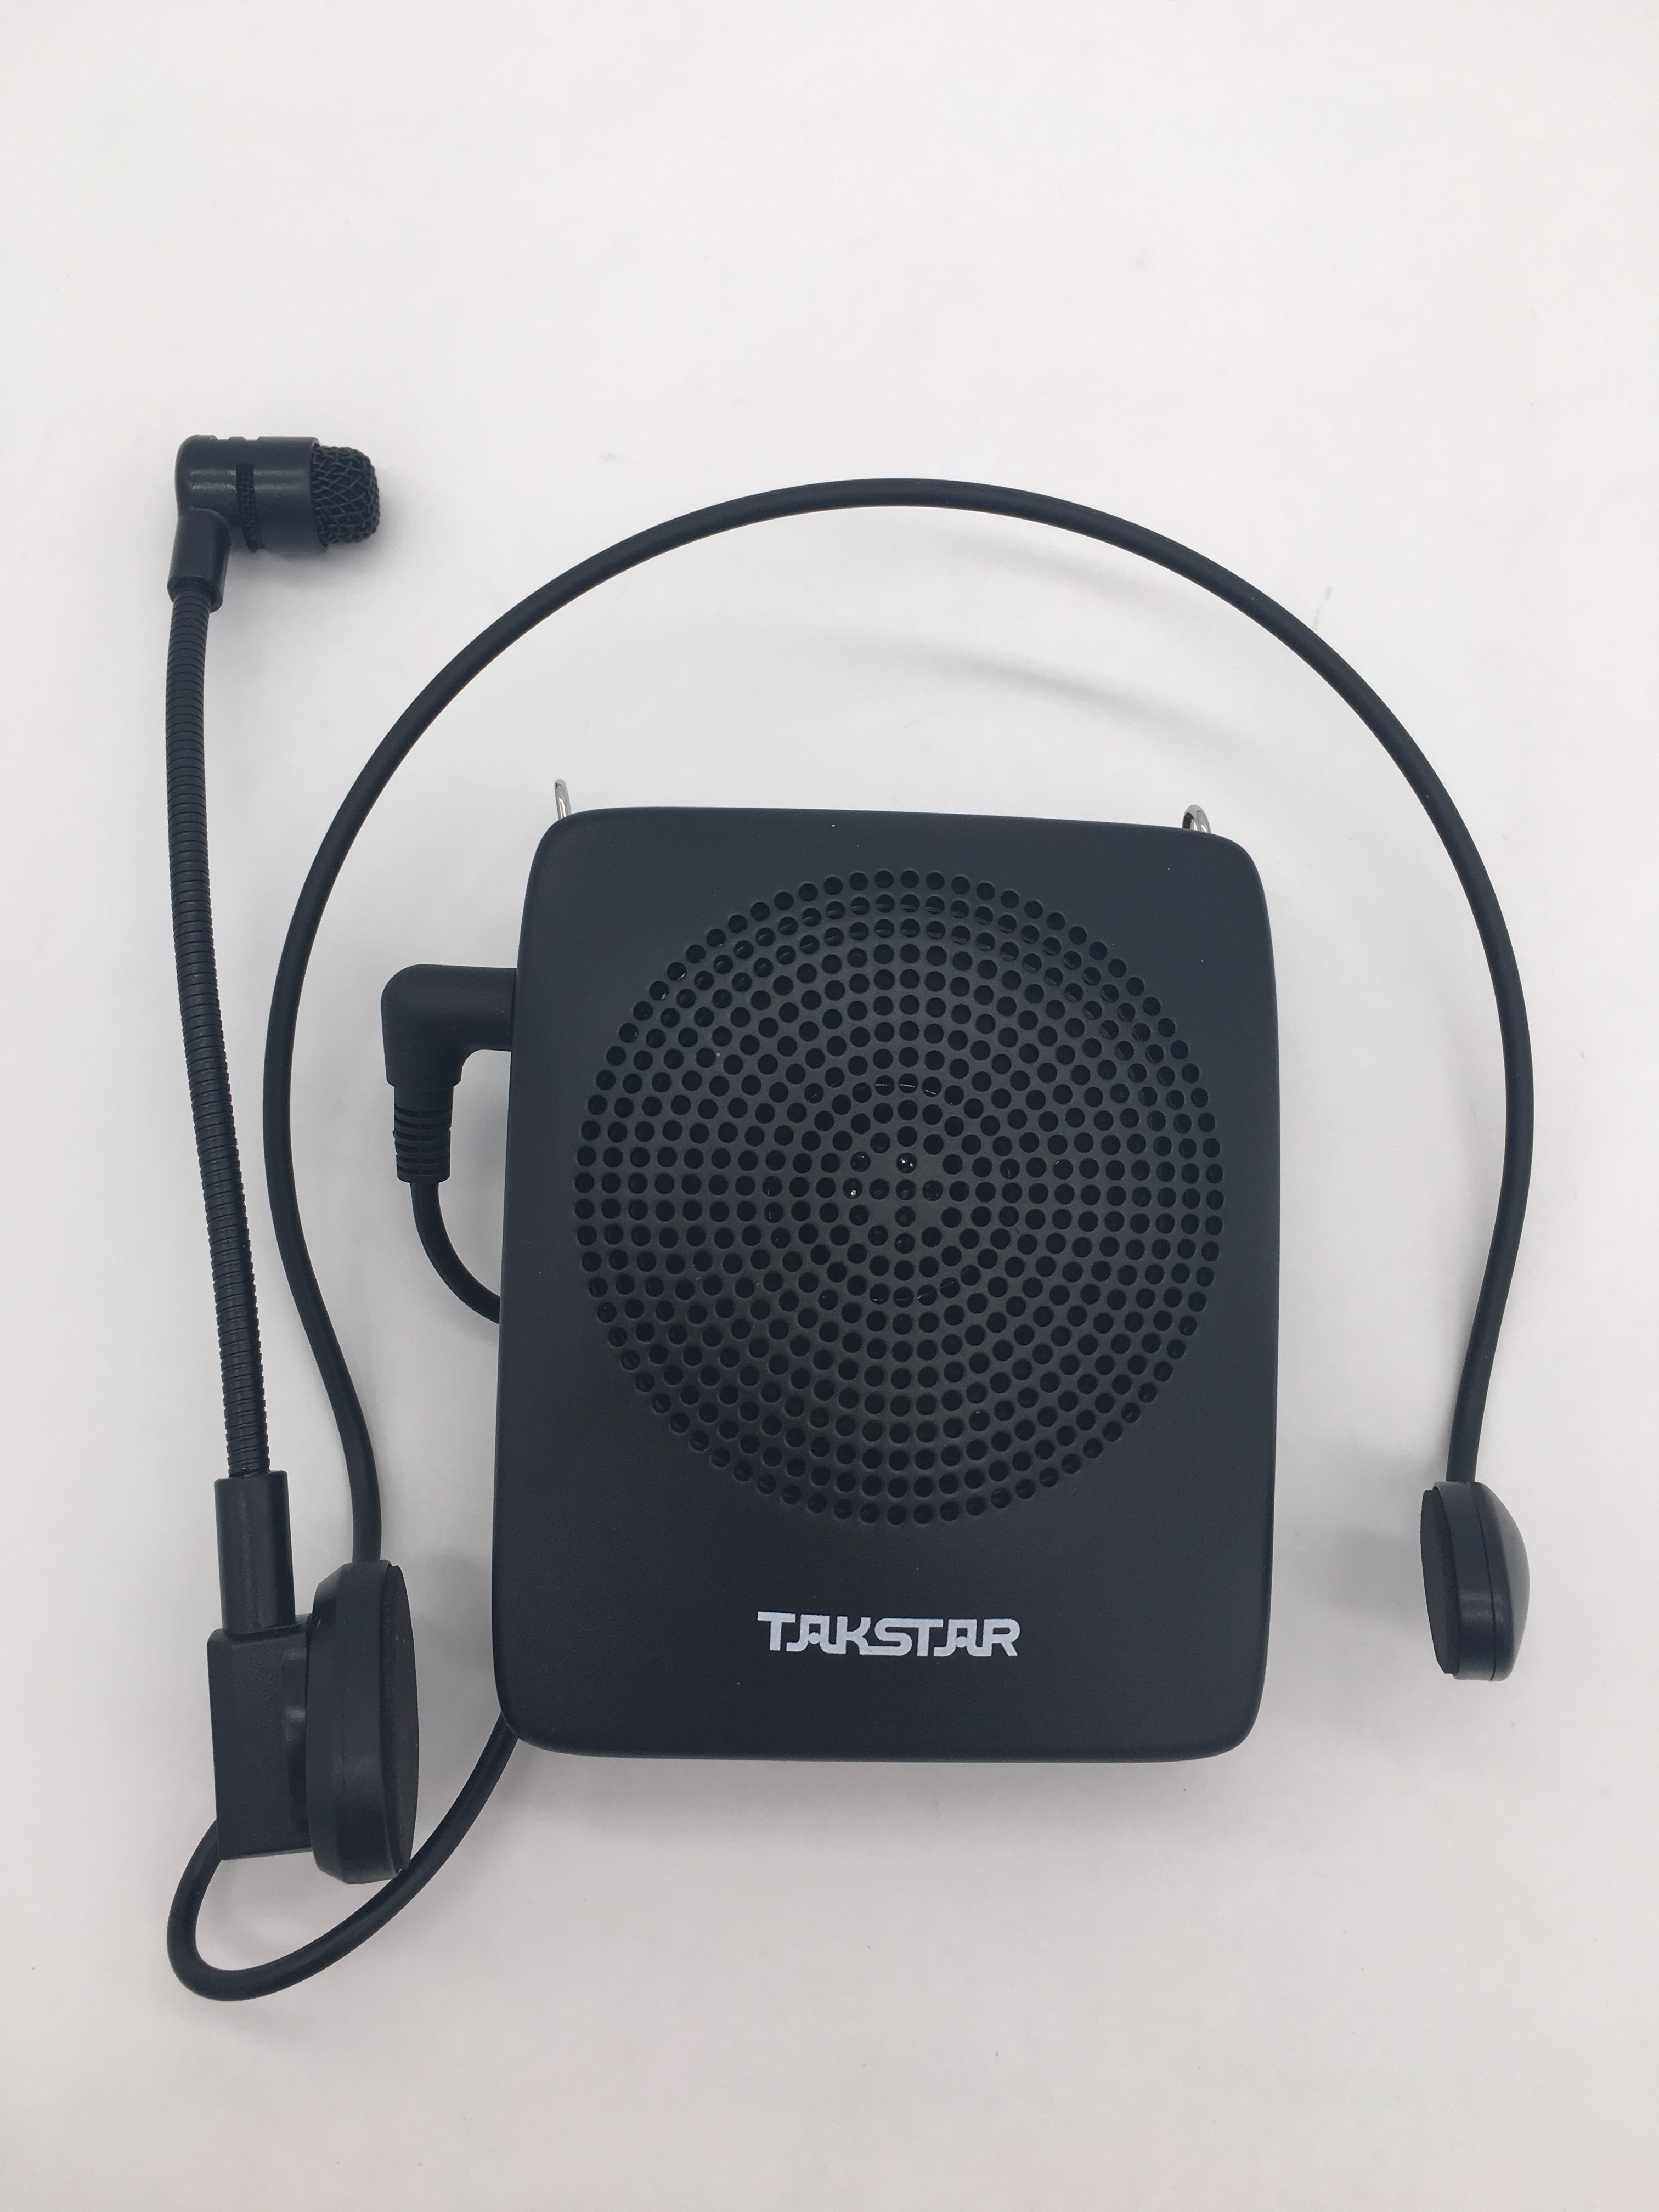 Takstar E128 mini draagbare luidspreker digitale luidspreker voice versterker voor teaching tour guiding training, telefoon muziek spelen